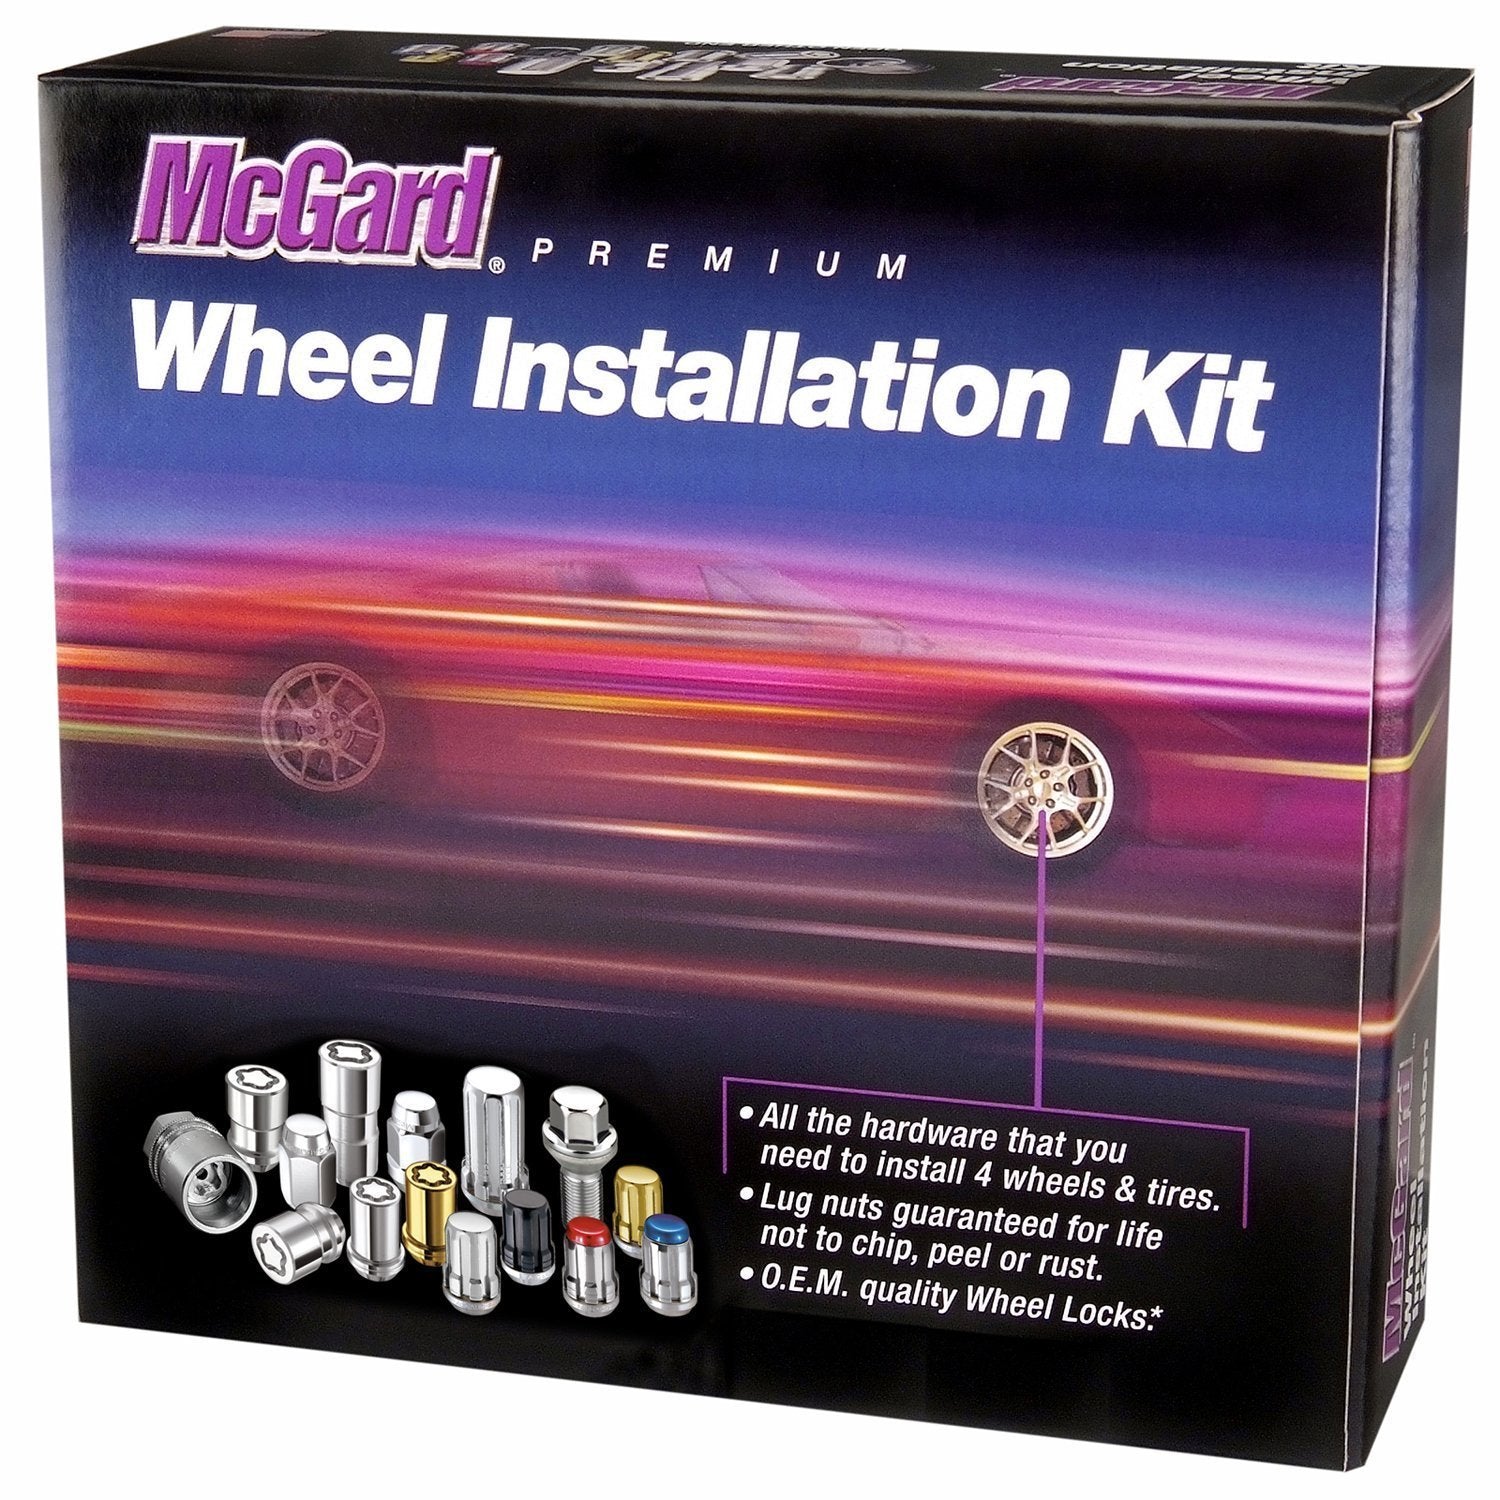 McGard, McGard Cone Seat Exposed Style Wheel Installation Kit / Chrome (84525)